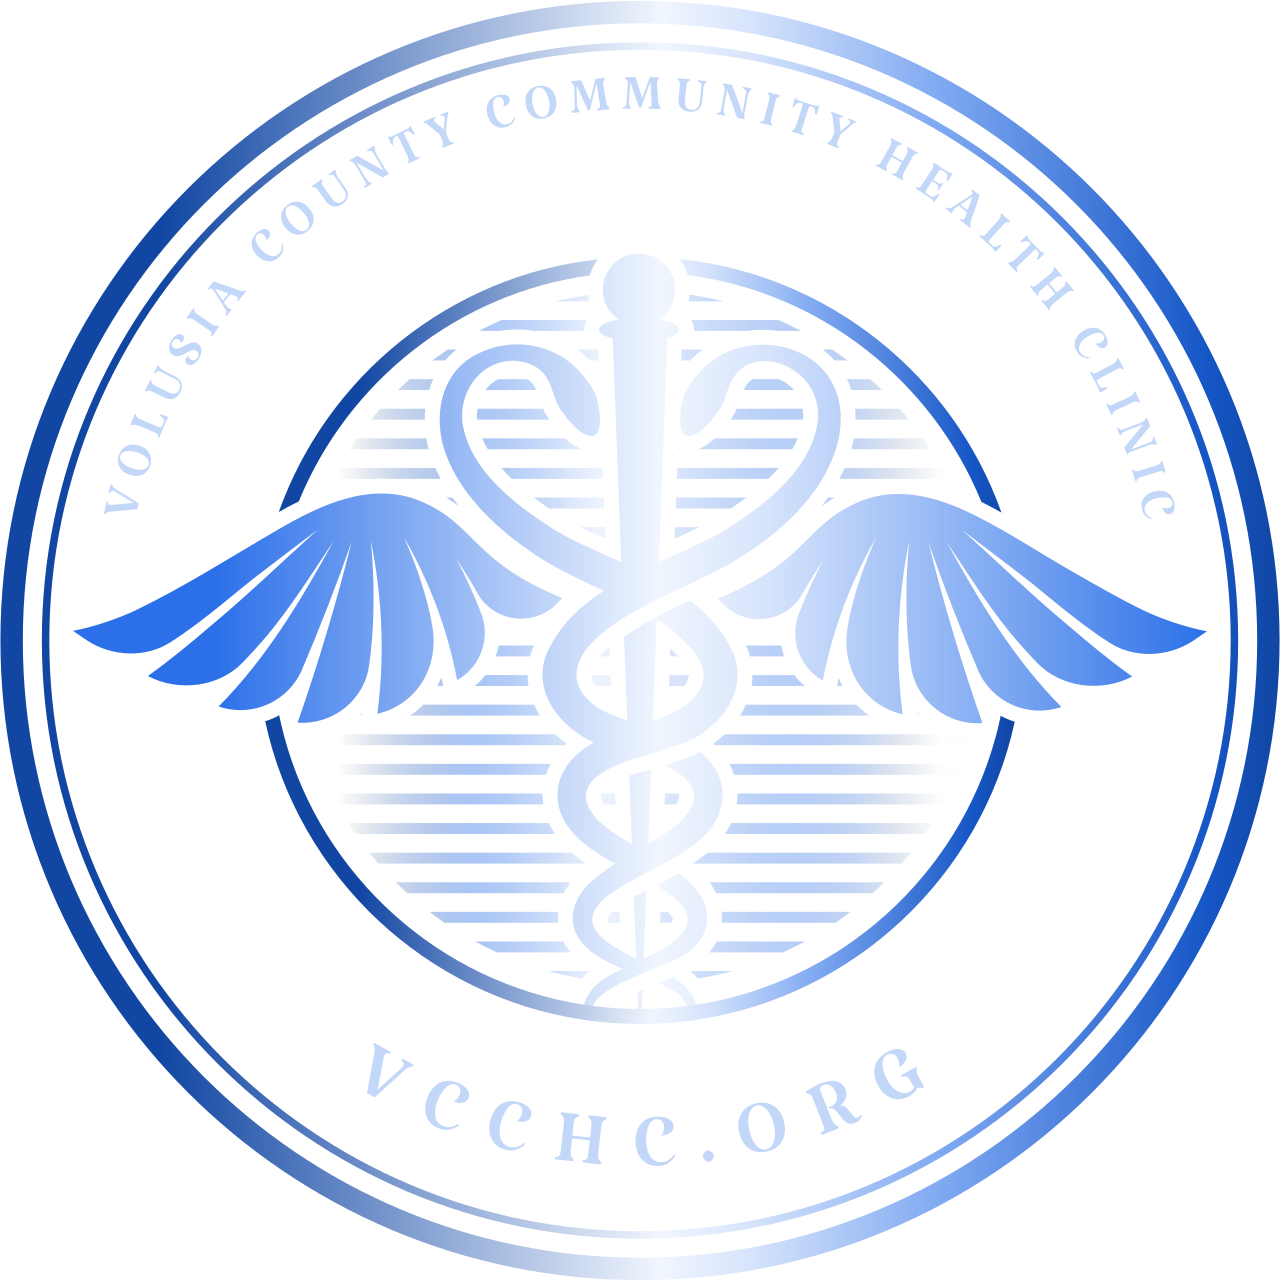 VOLUSIA COUNTY COMMUNITY HEALTH CLINIC's logo